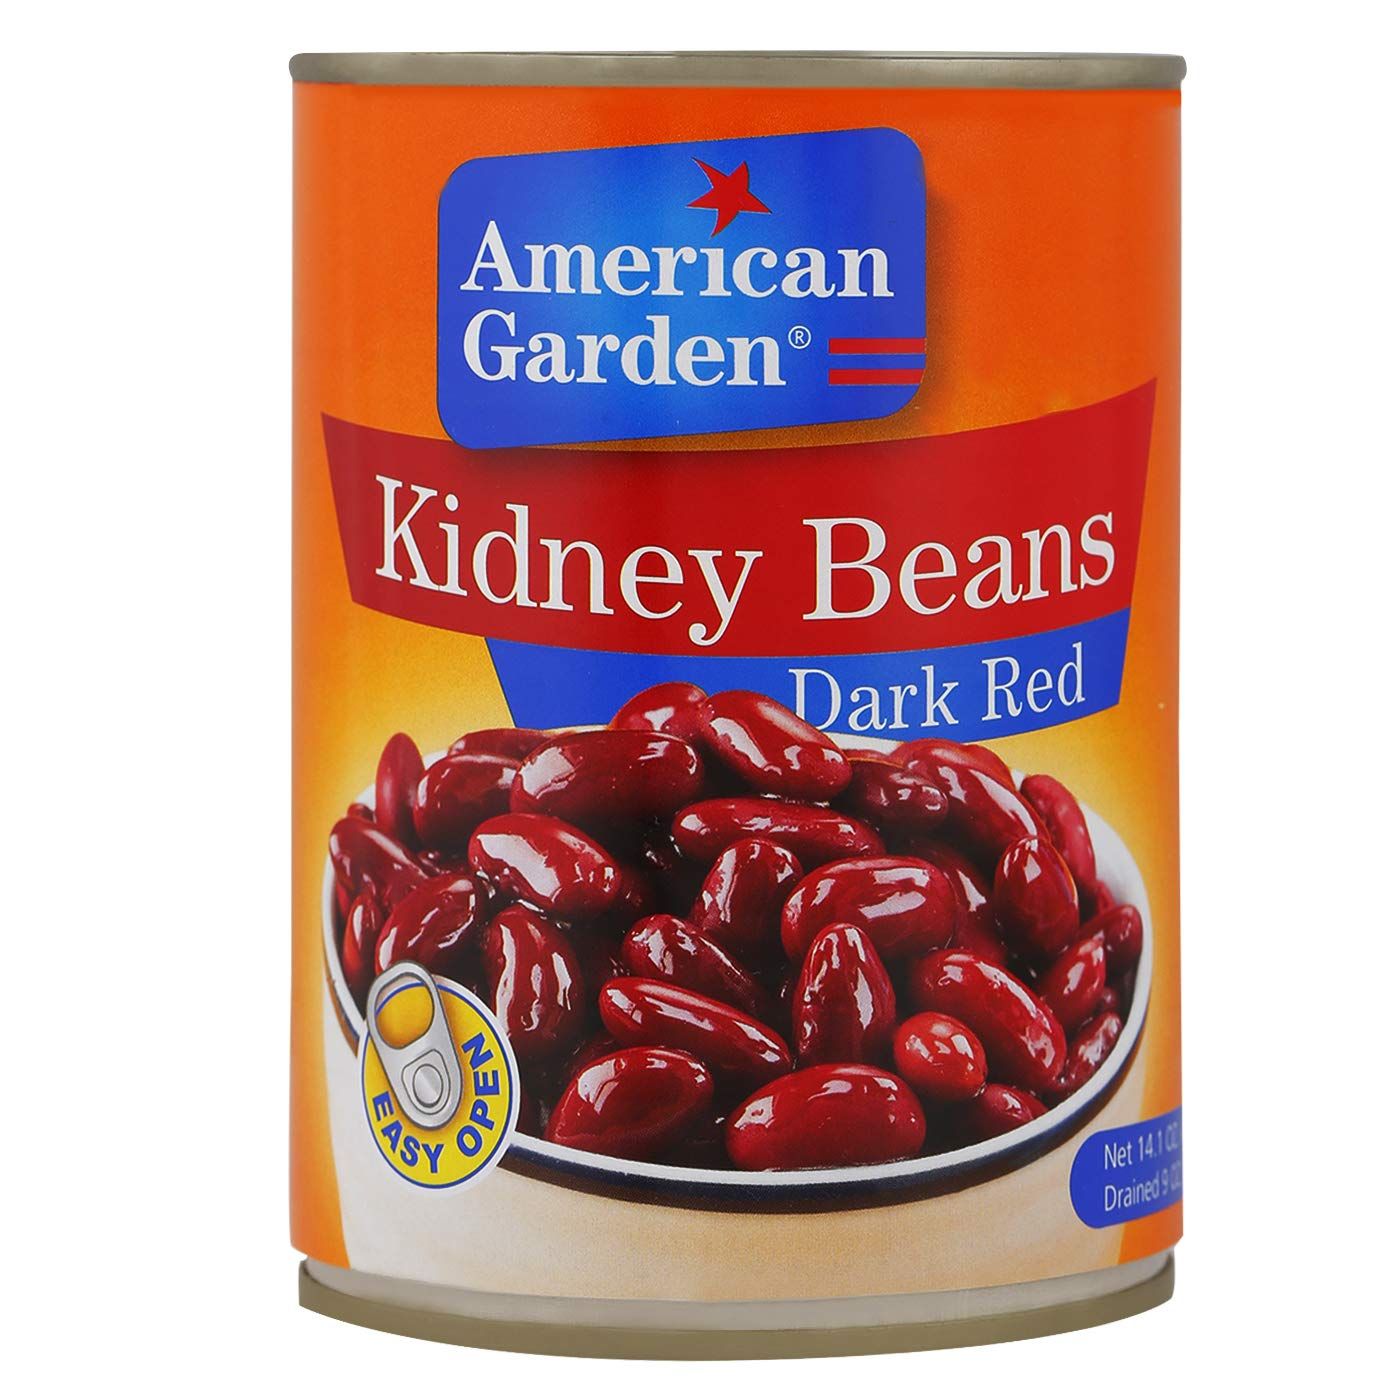 American Garden Kidney Beans Image